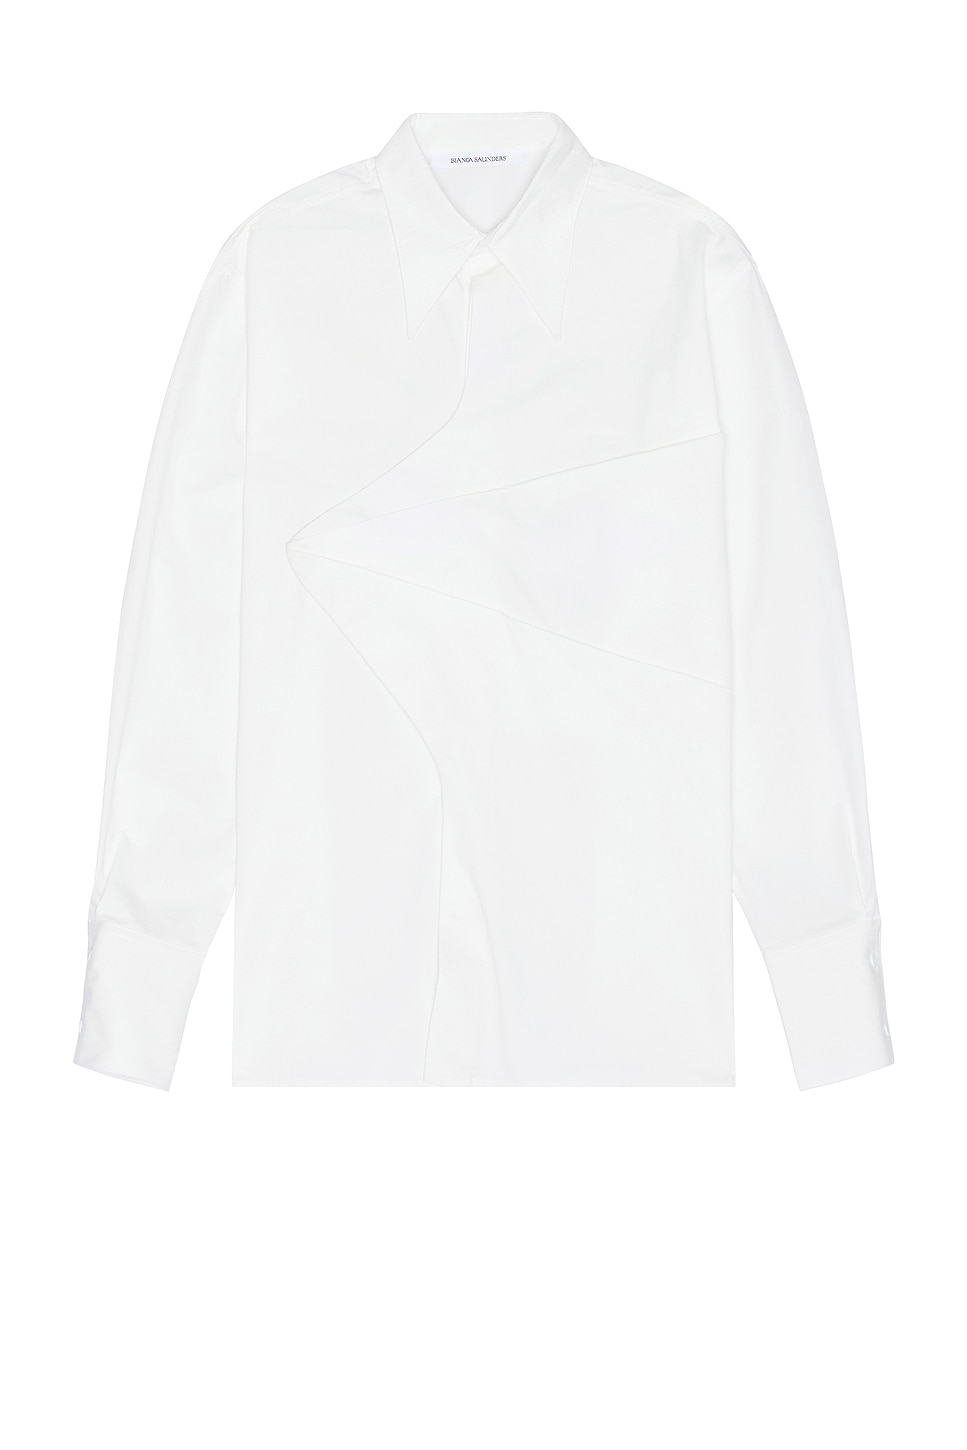 Image 1 of Bianca Saunders Freetown Shirt in White